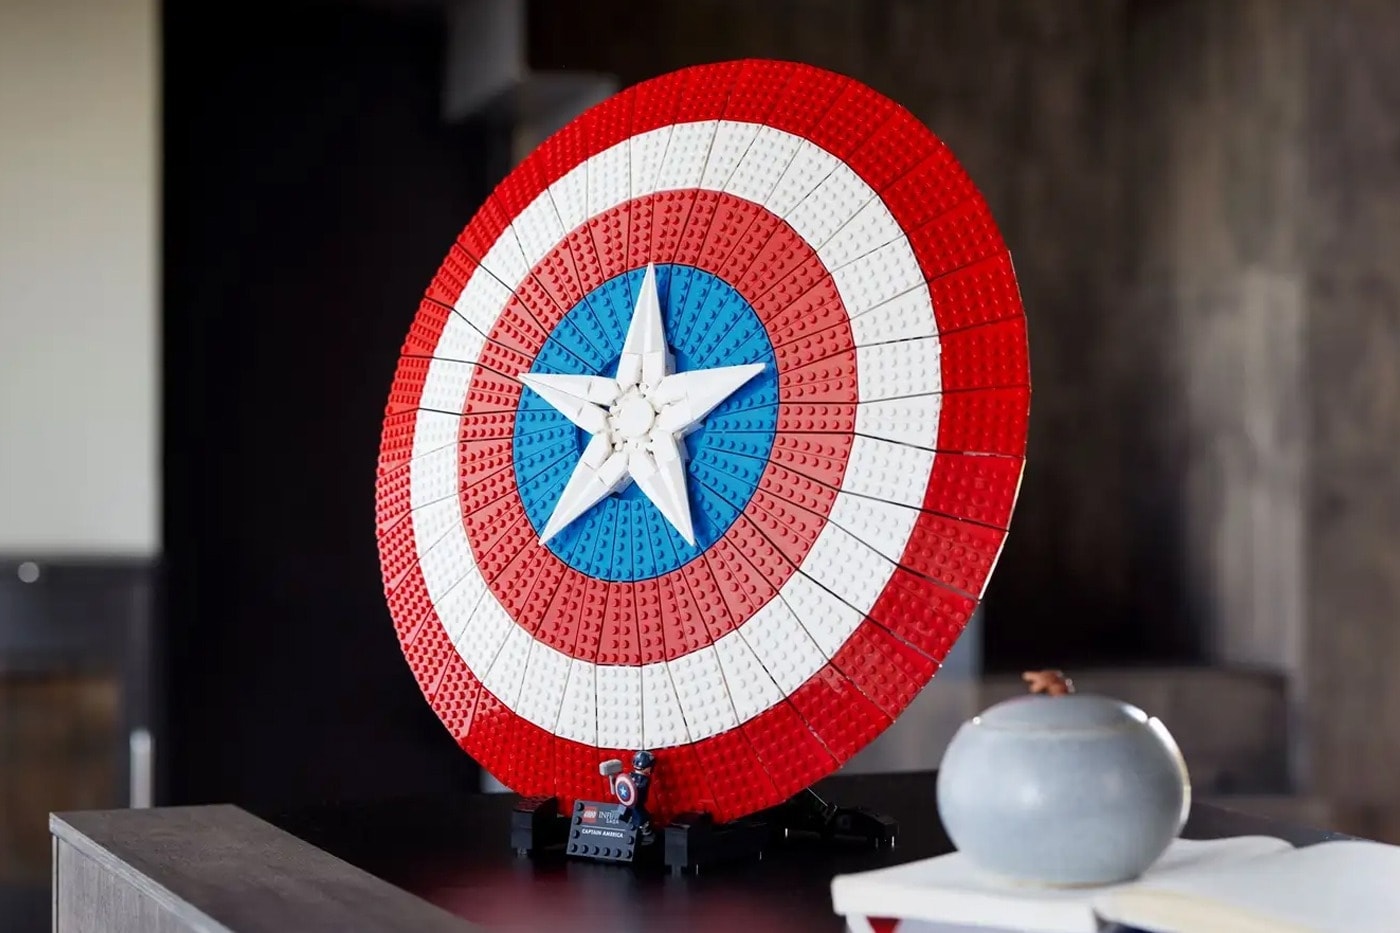 LEGO 正式推出 Marvel「Captain America’s Shield」套组